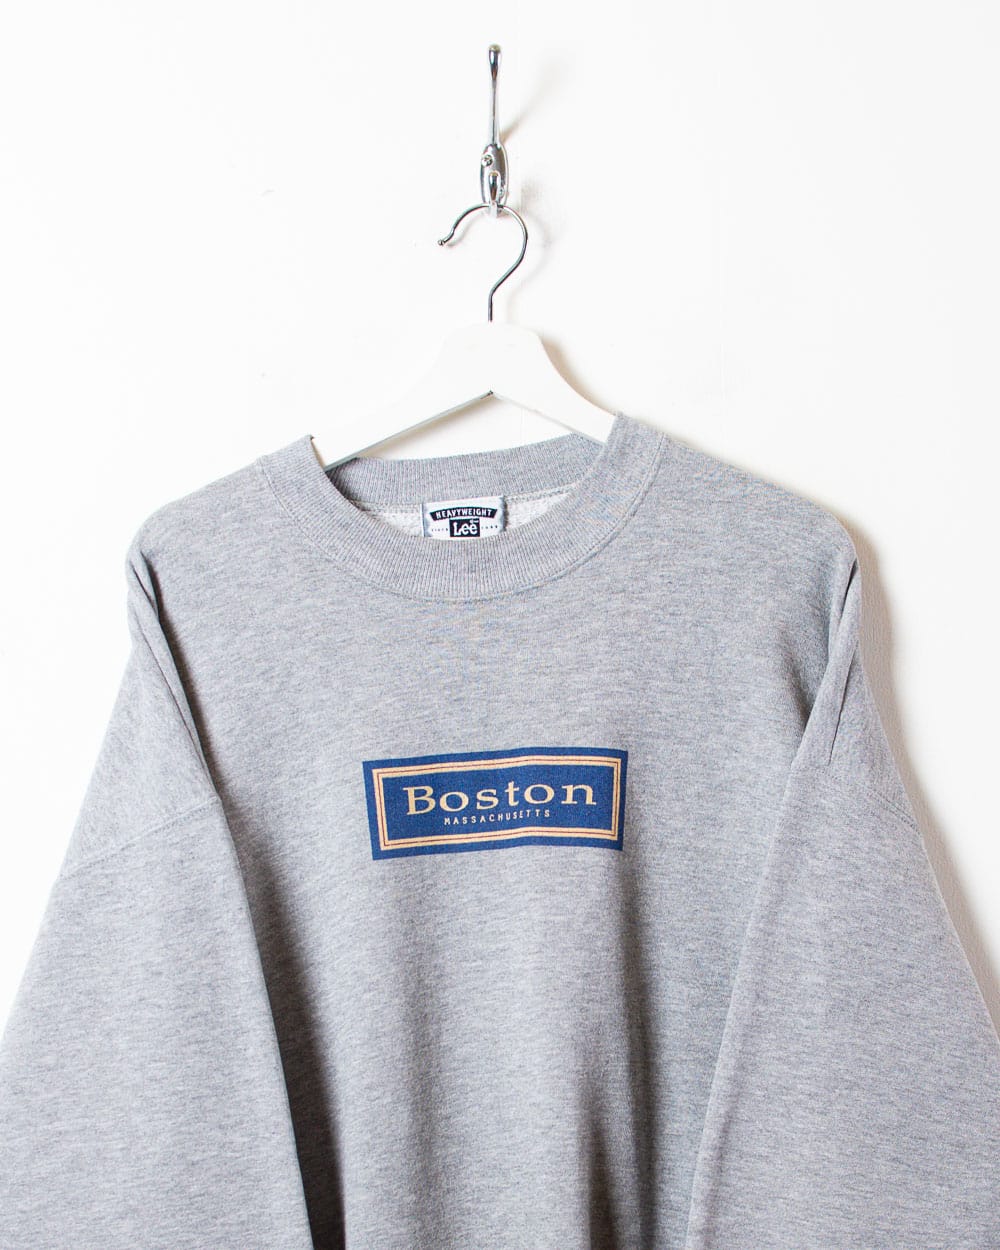 Stone Lee Boston Massachusetts Sweatshirt - X-Large